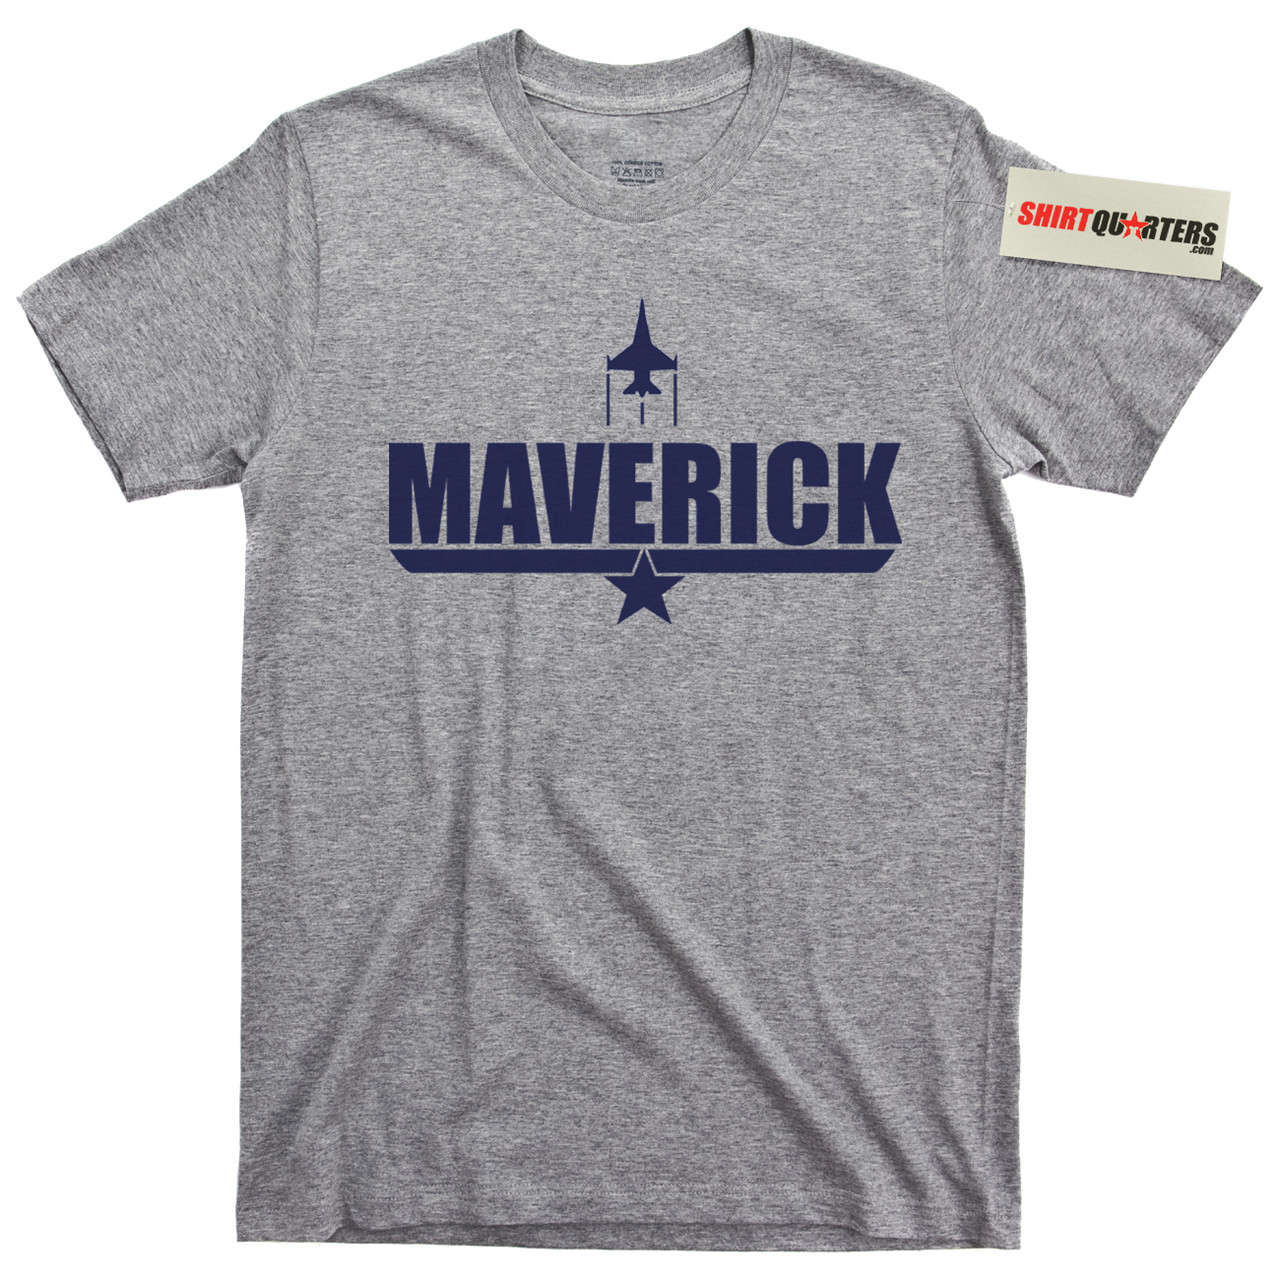 Top Gun - White Maverick - T-Shirt